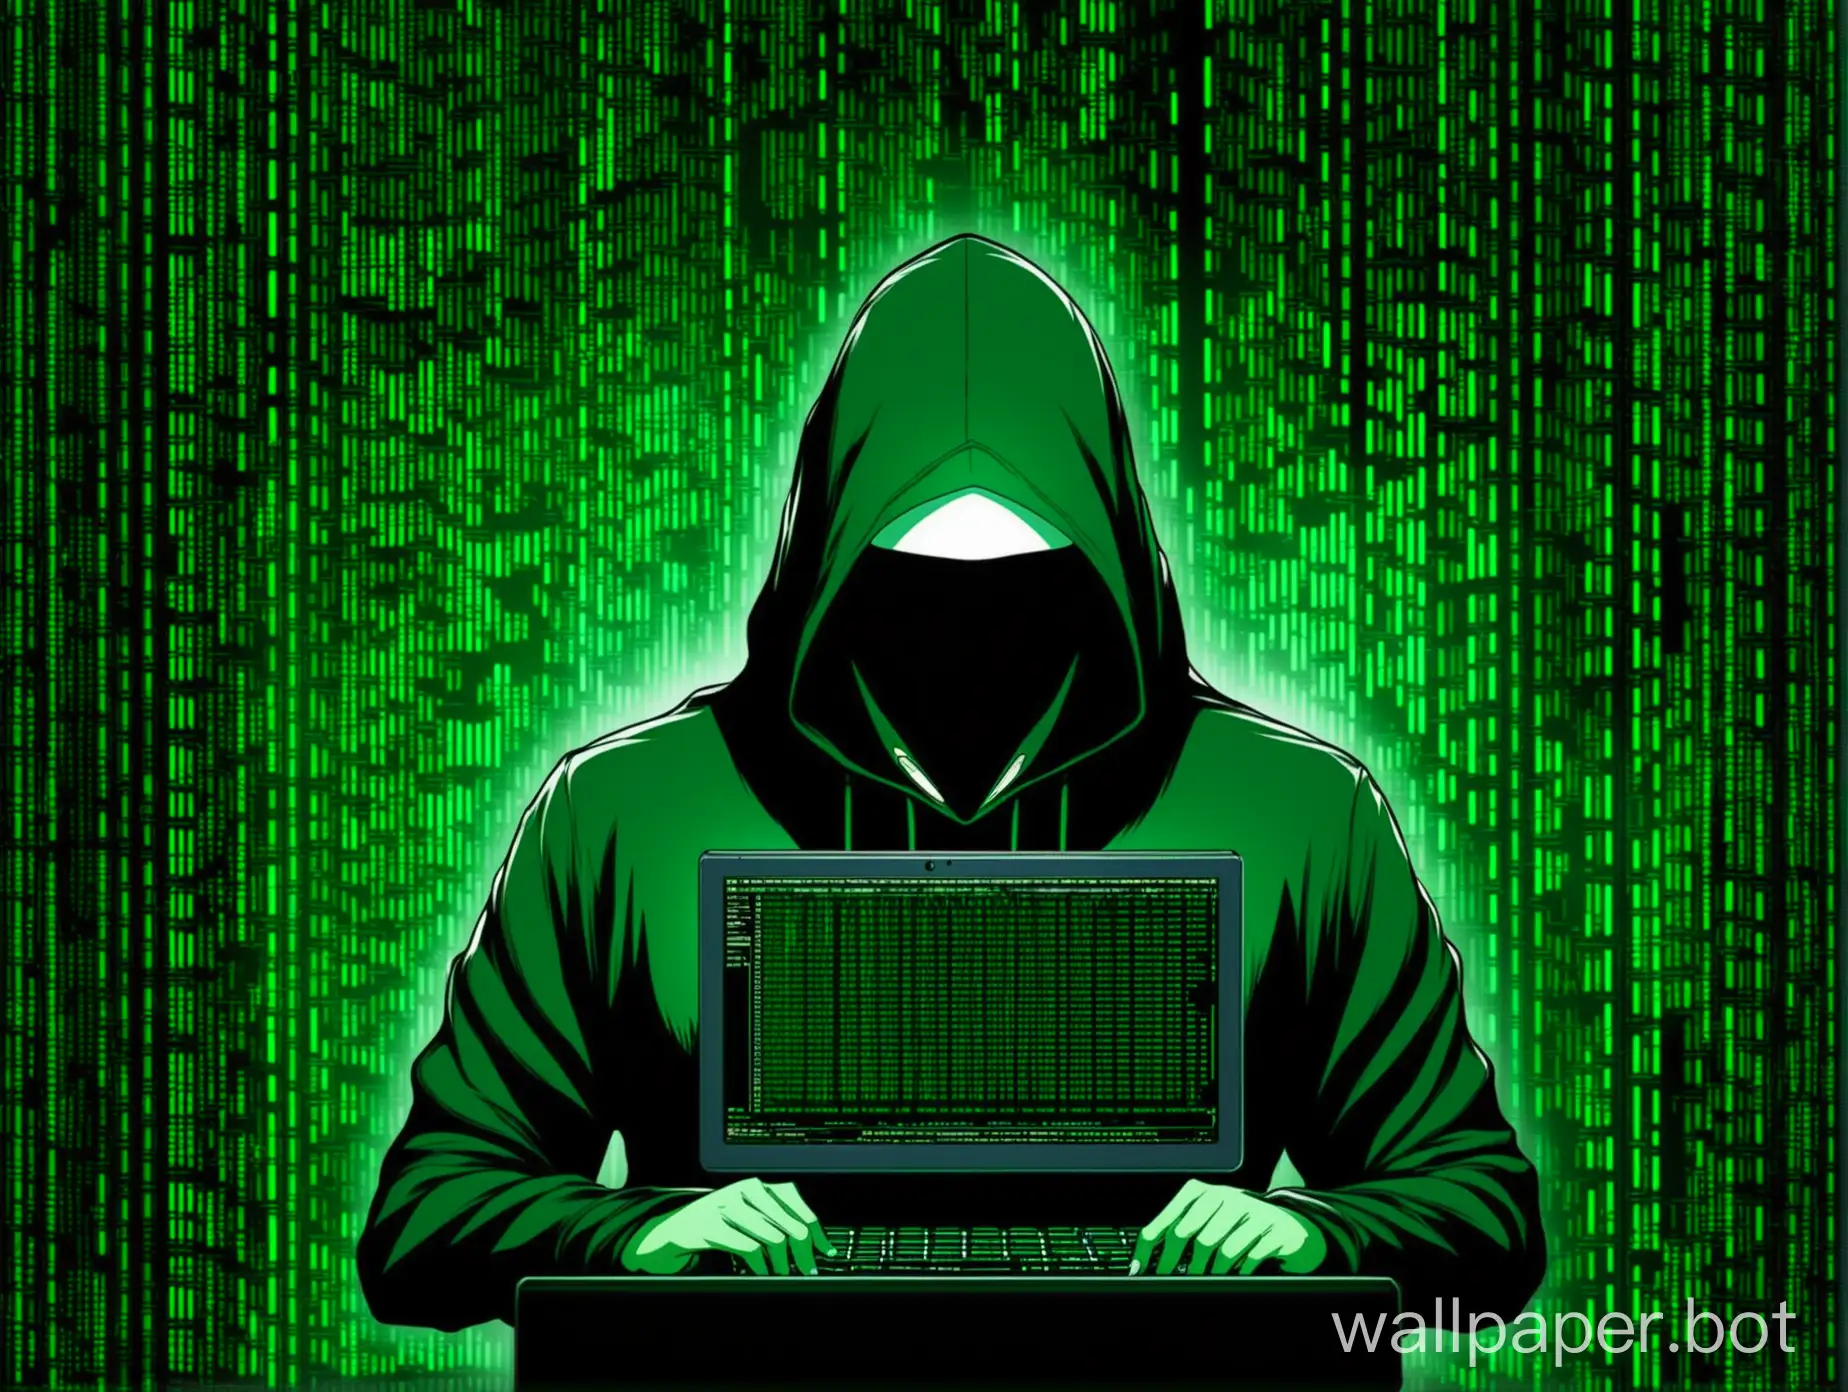 hacking the matrix, kali linux, penetration testing and reverse engineering